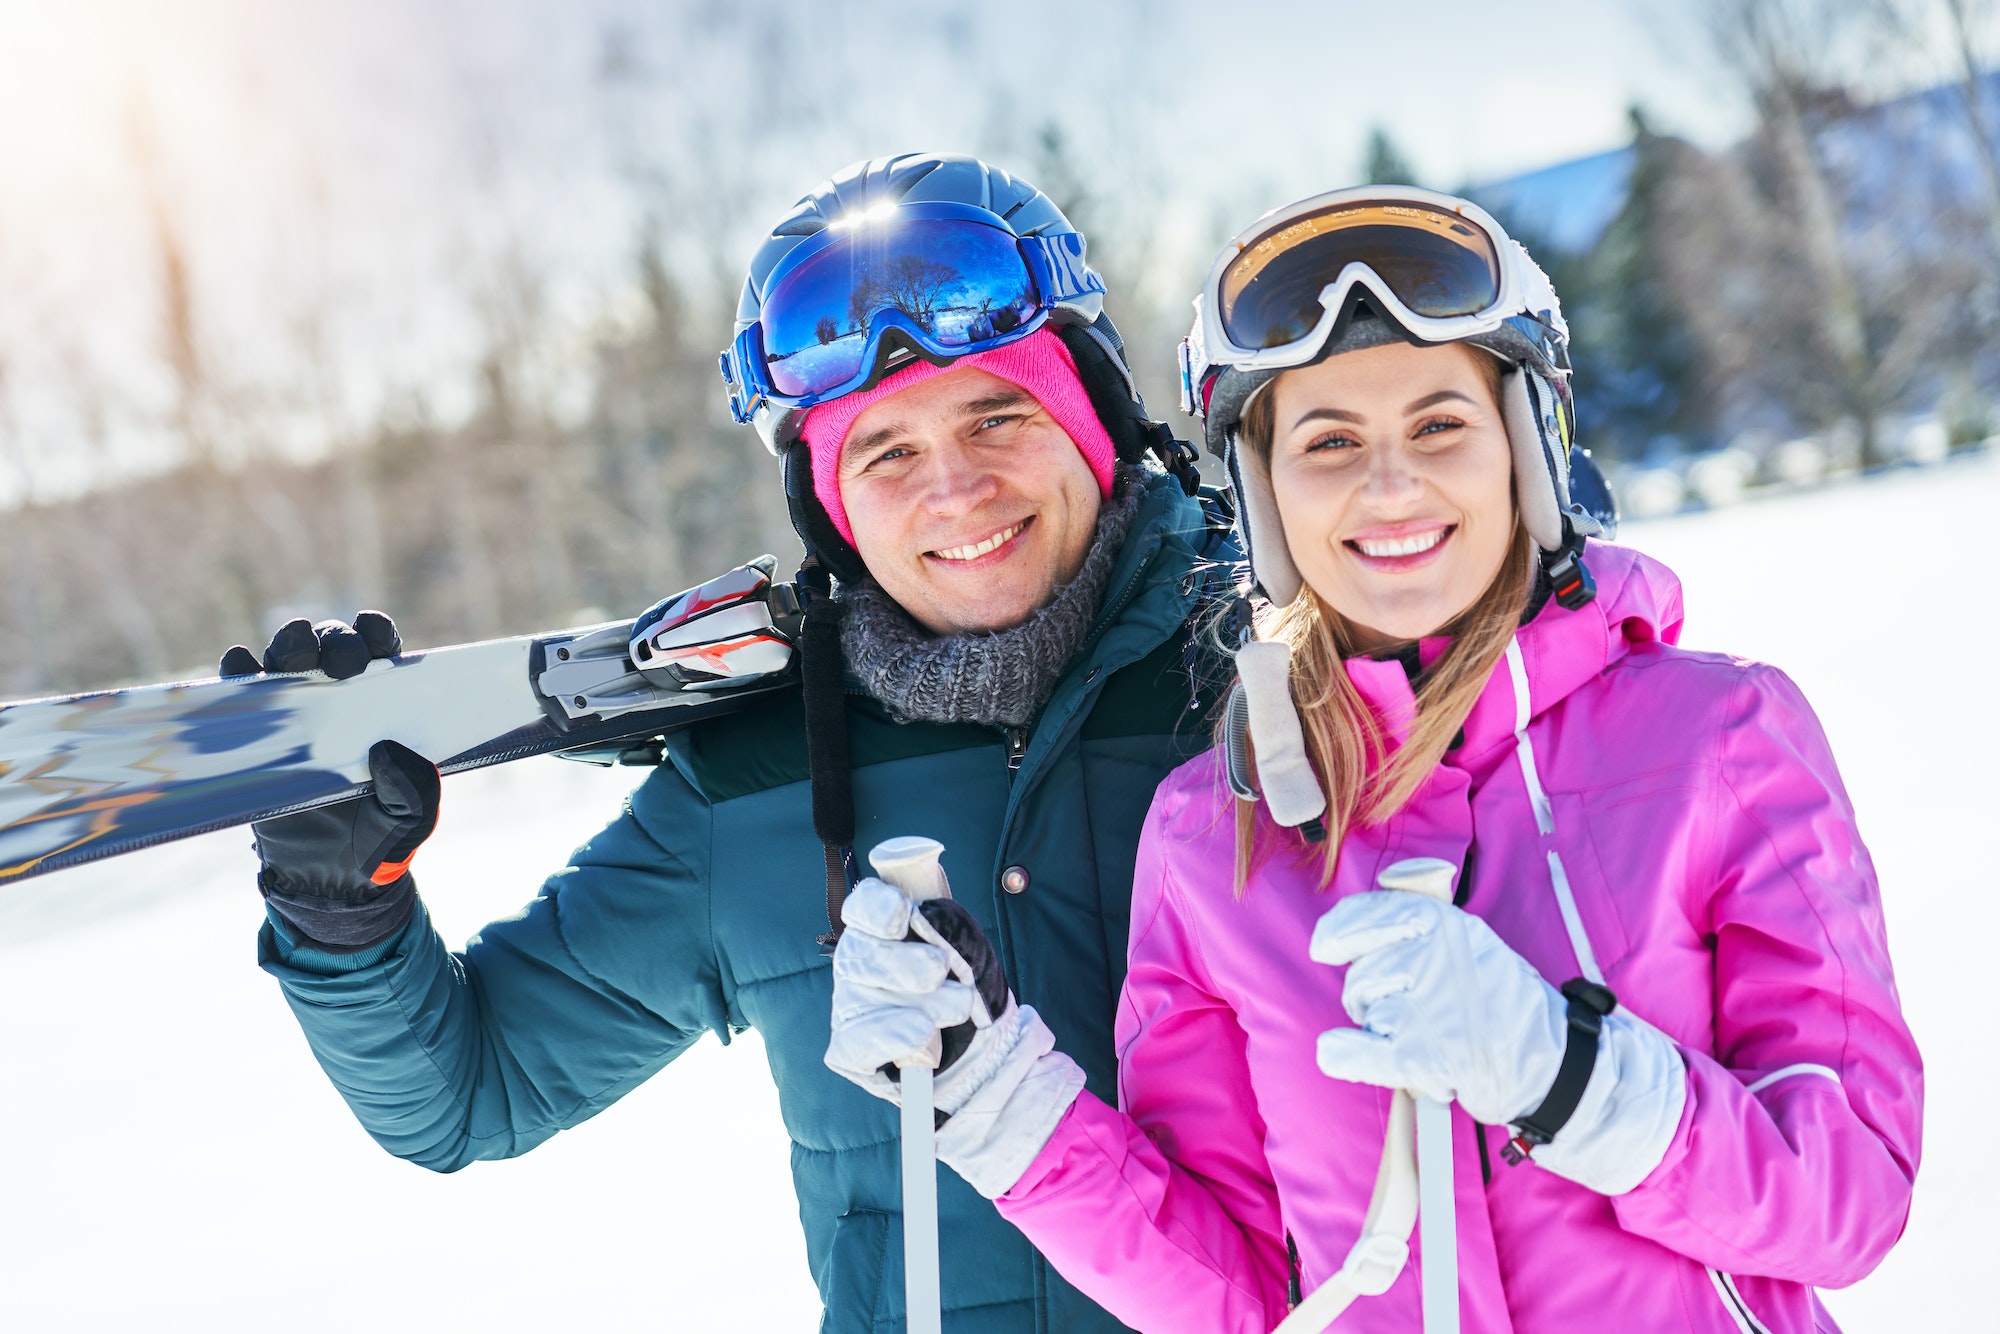 Young couple having fun while winter skiing